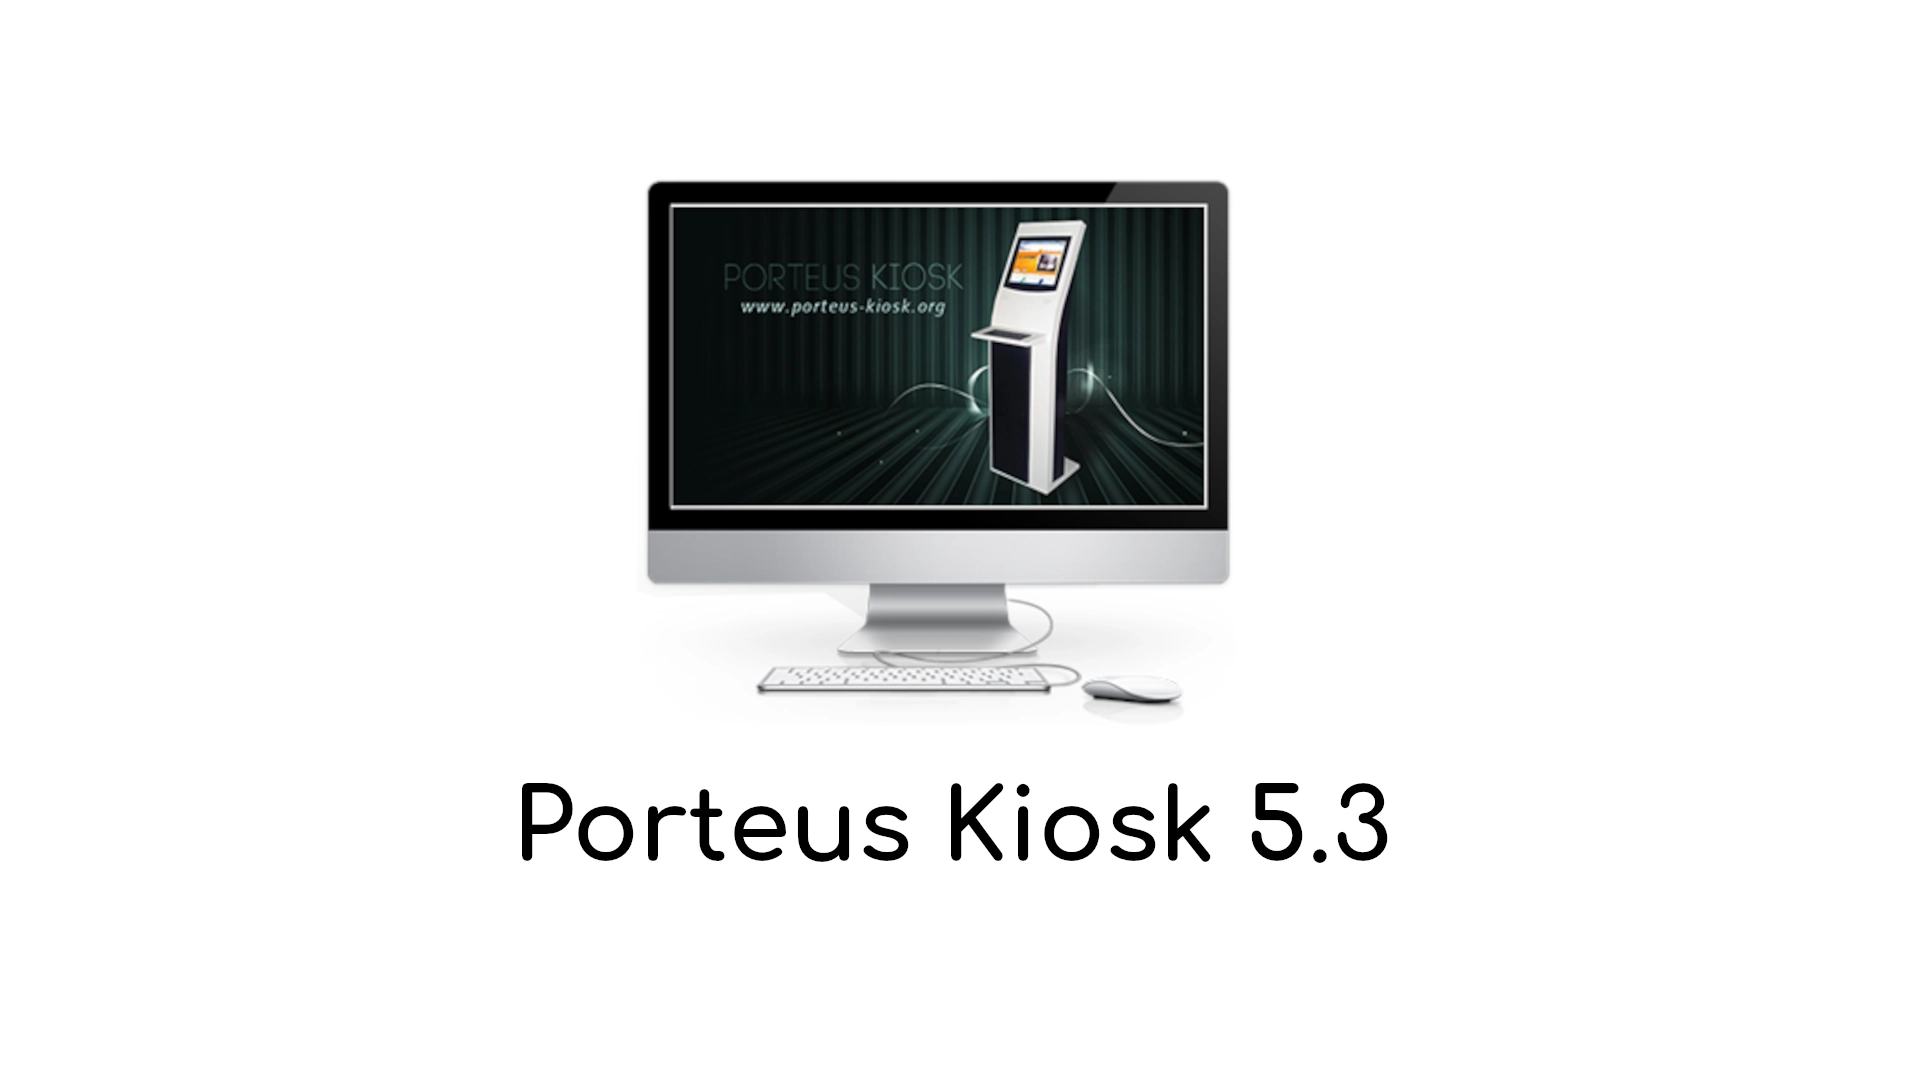 Gentoo-Based Porteus Kiosk 5.3 Released with Hardware Video Decoding, Virtual Keyboard